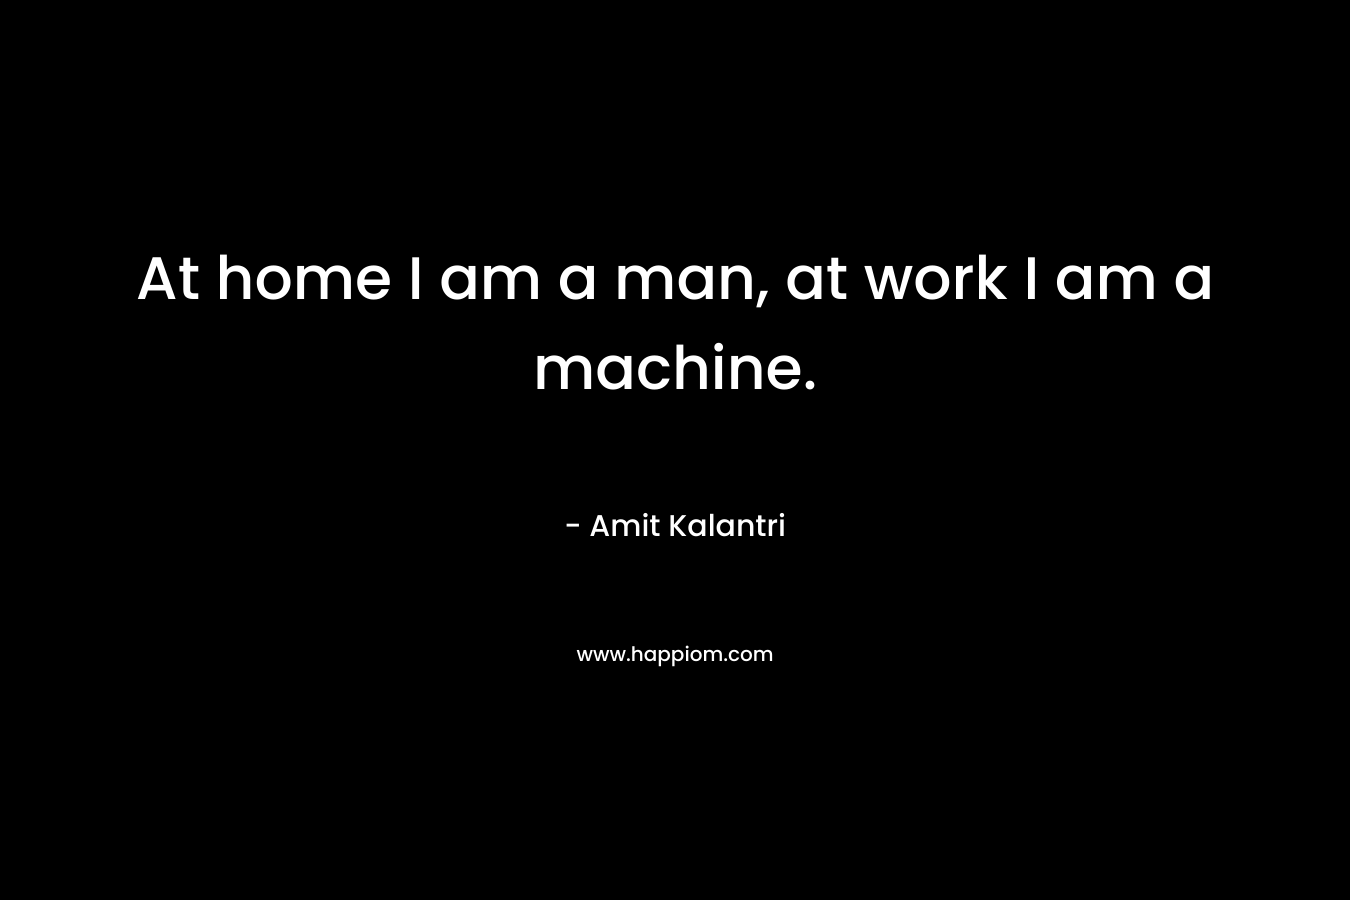 At home I am a man, at work I am a machine.